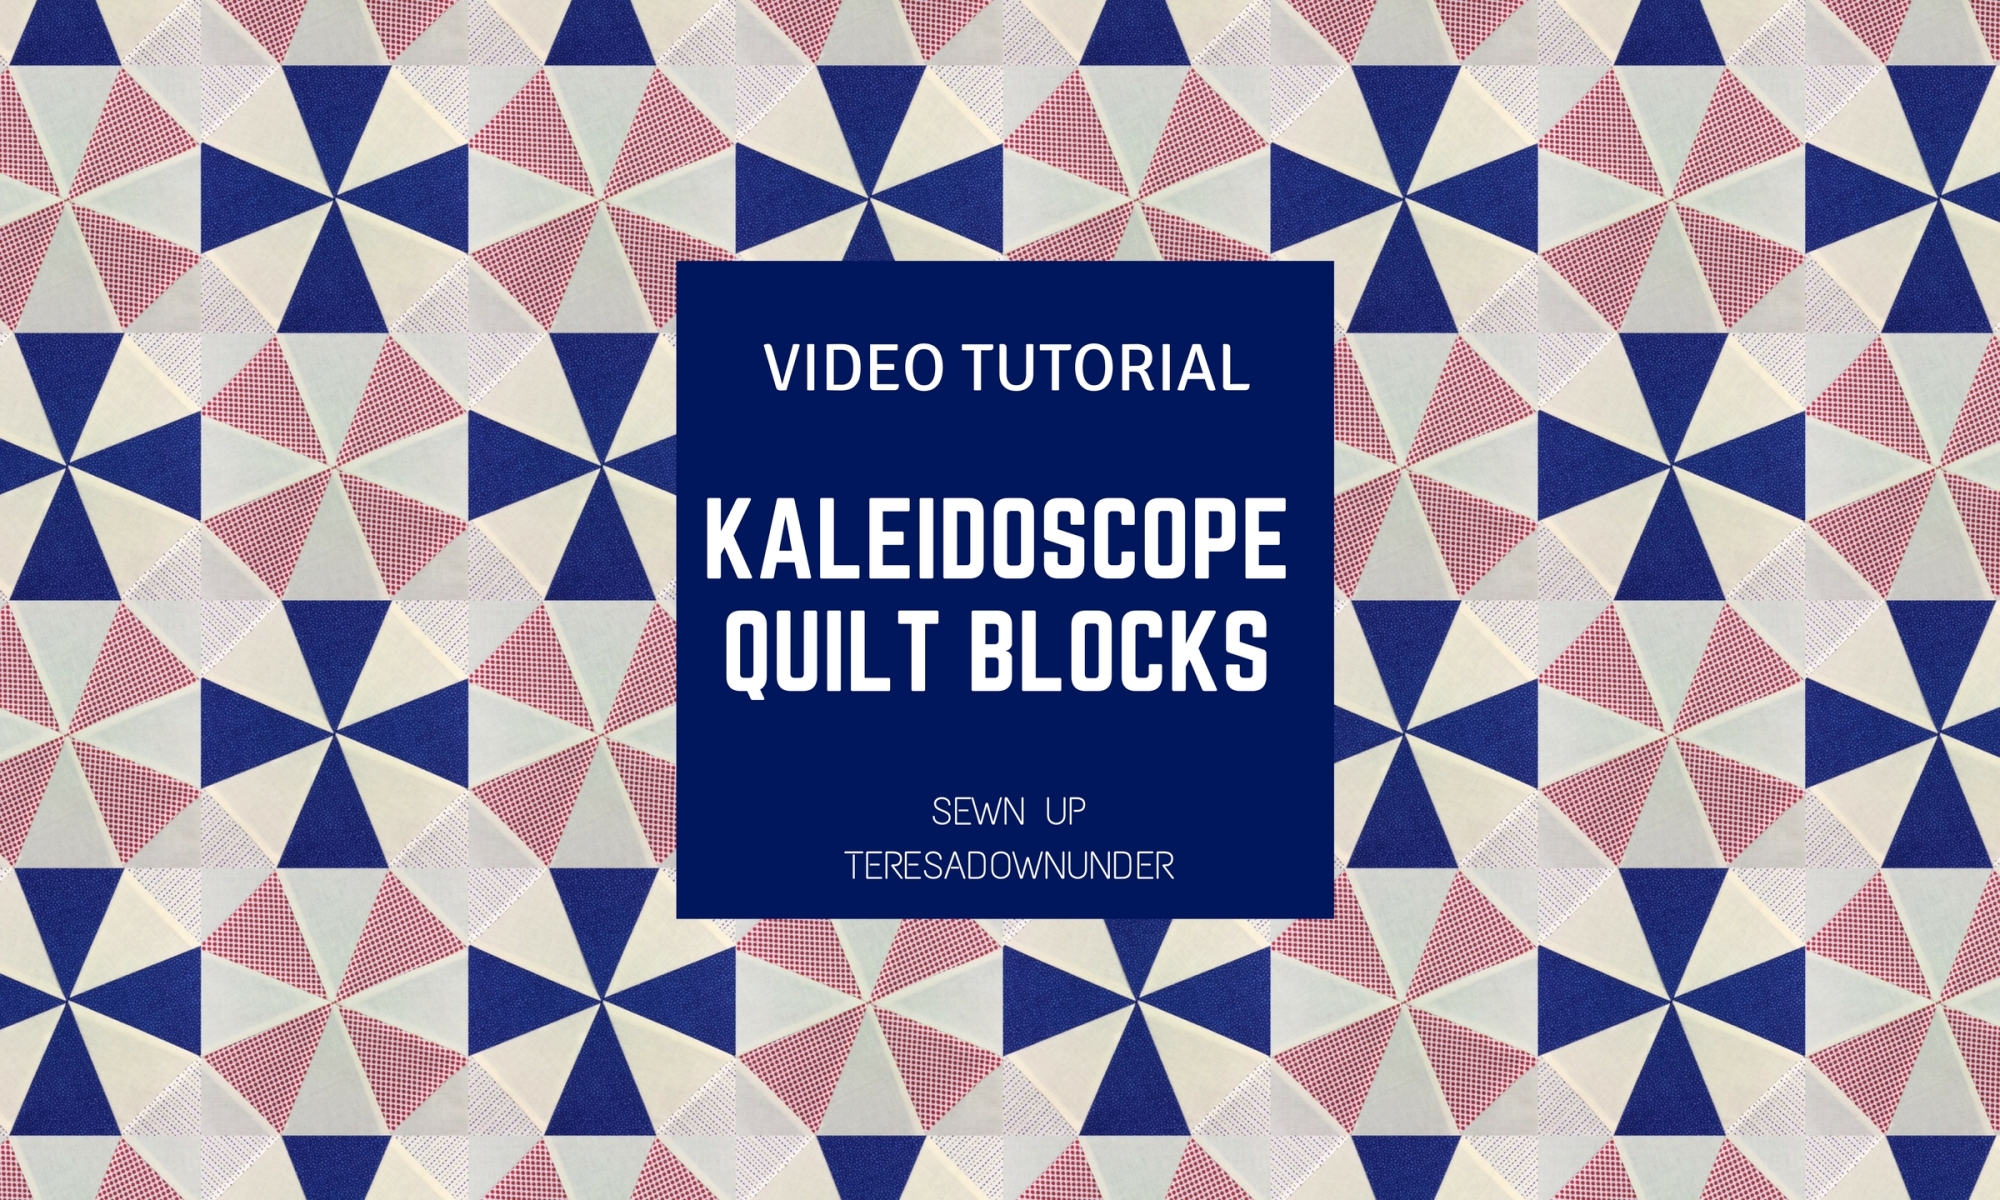 Video tutorial: Kaleidoscope quilt blocks - Quick and easy quilting